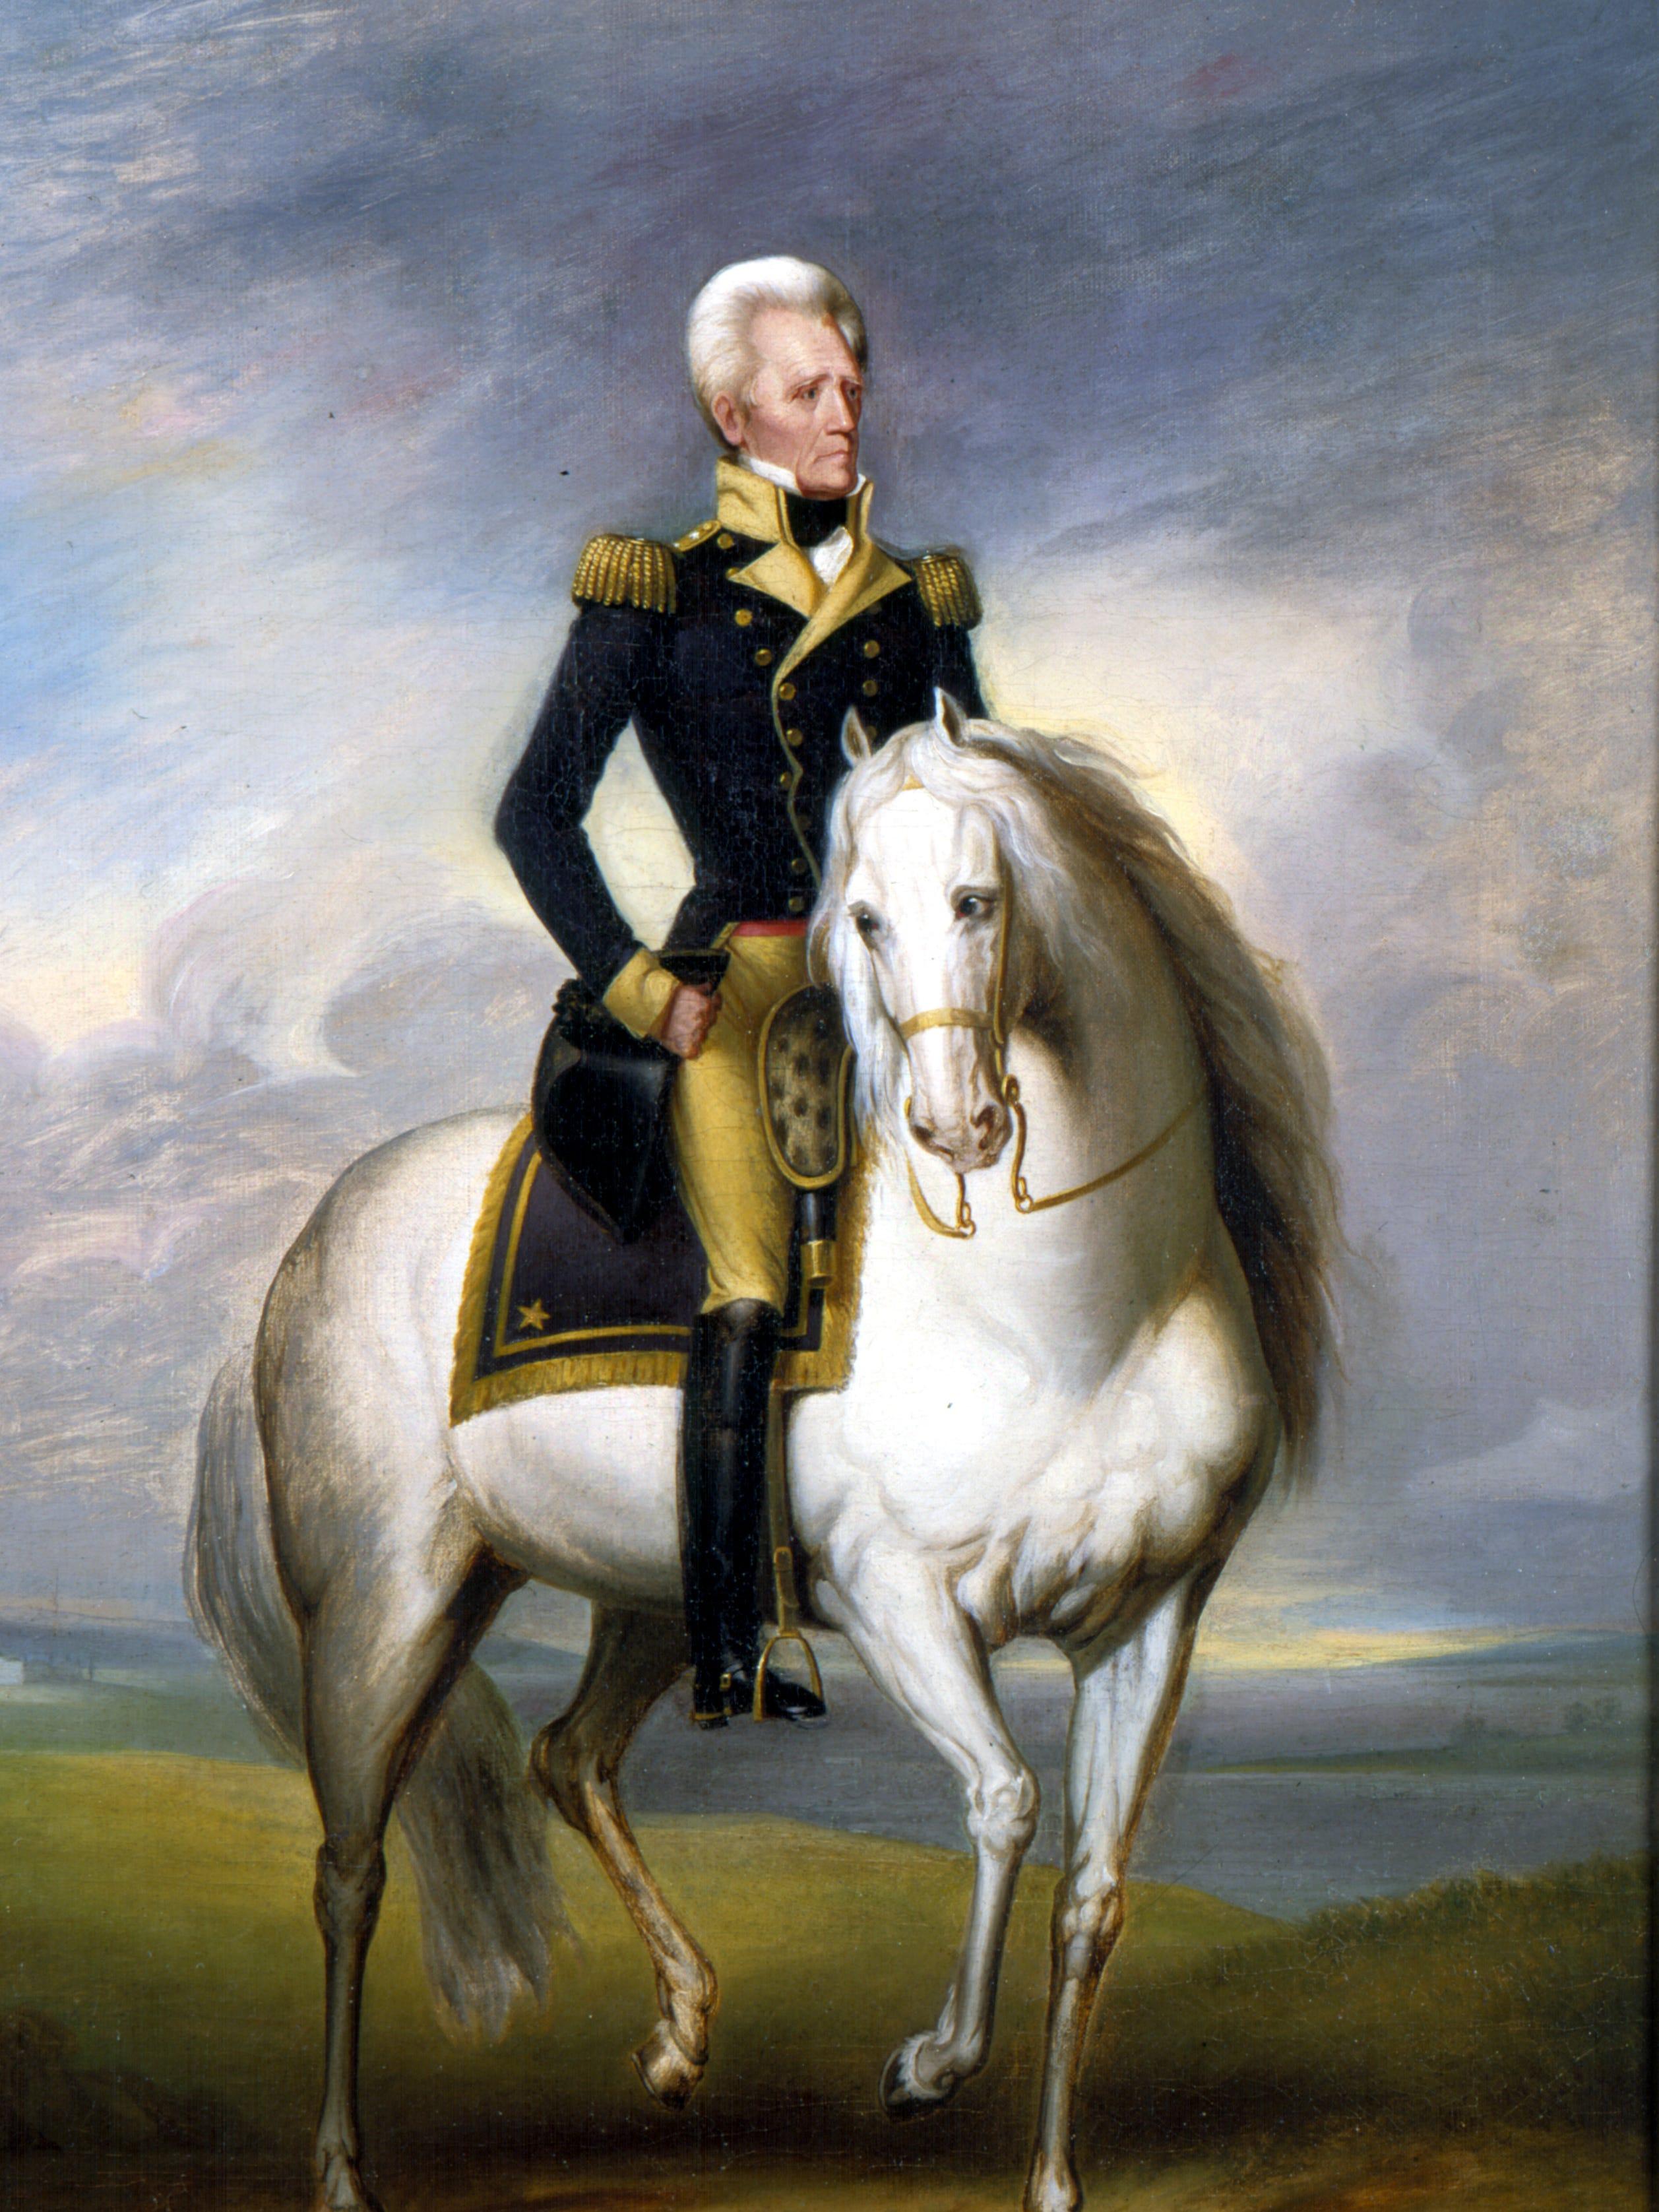 A portrait of Andrew Jackson.